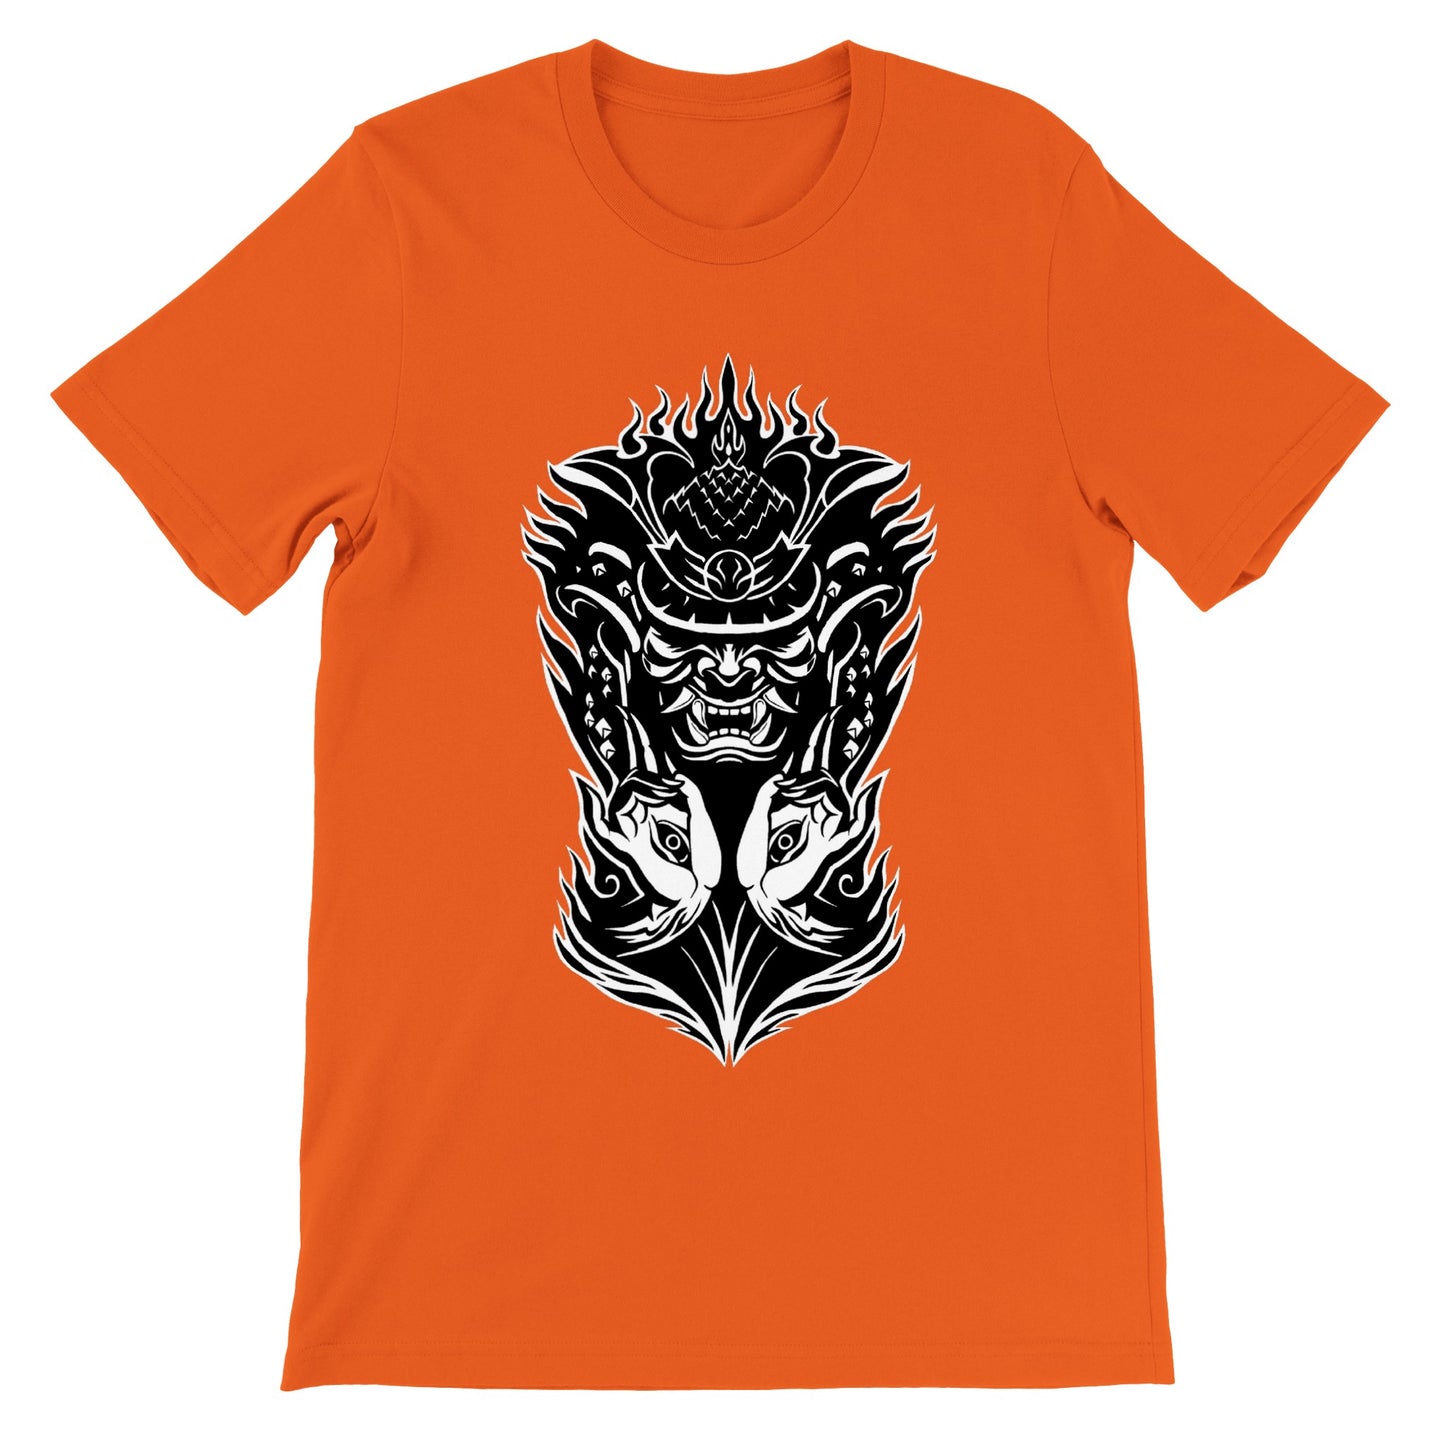 KURO SHADOWS "Black Samurai" Premium Unisex Crewneck T-shirt